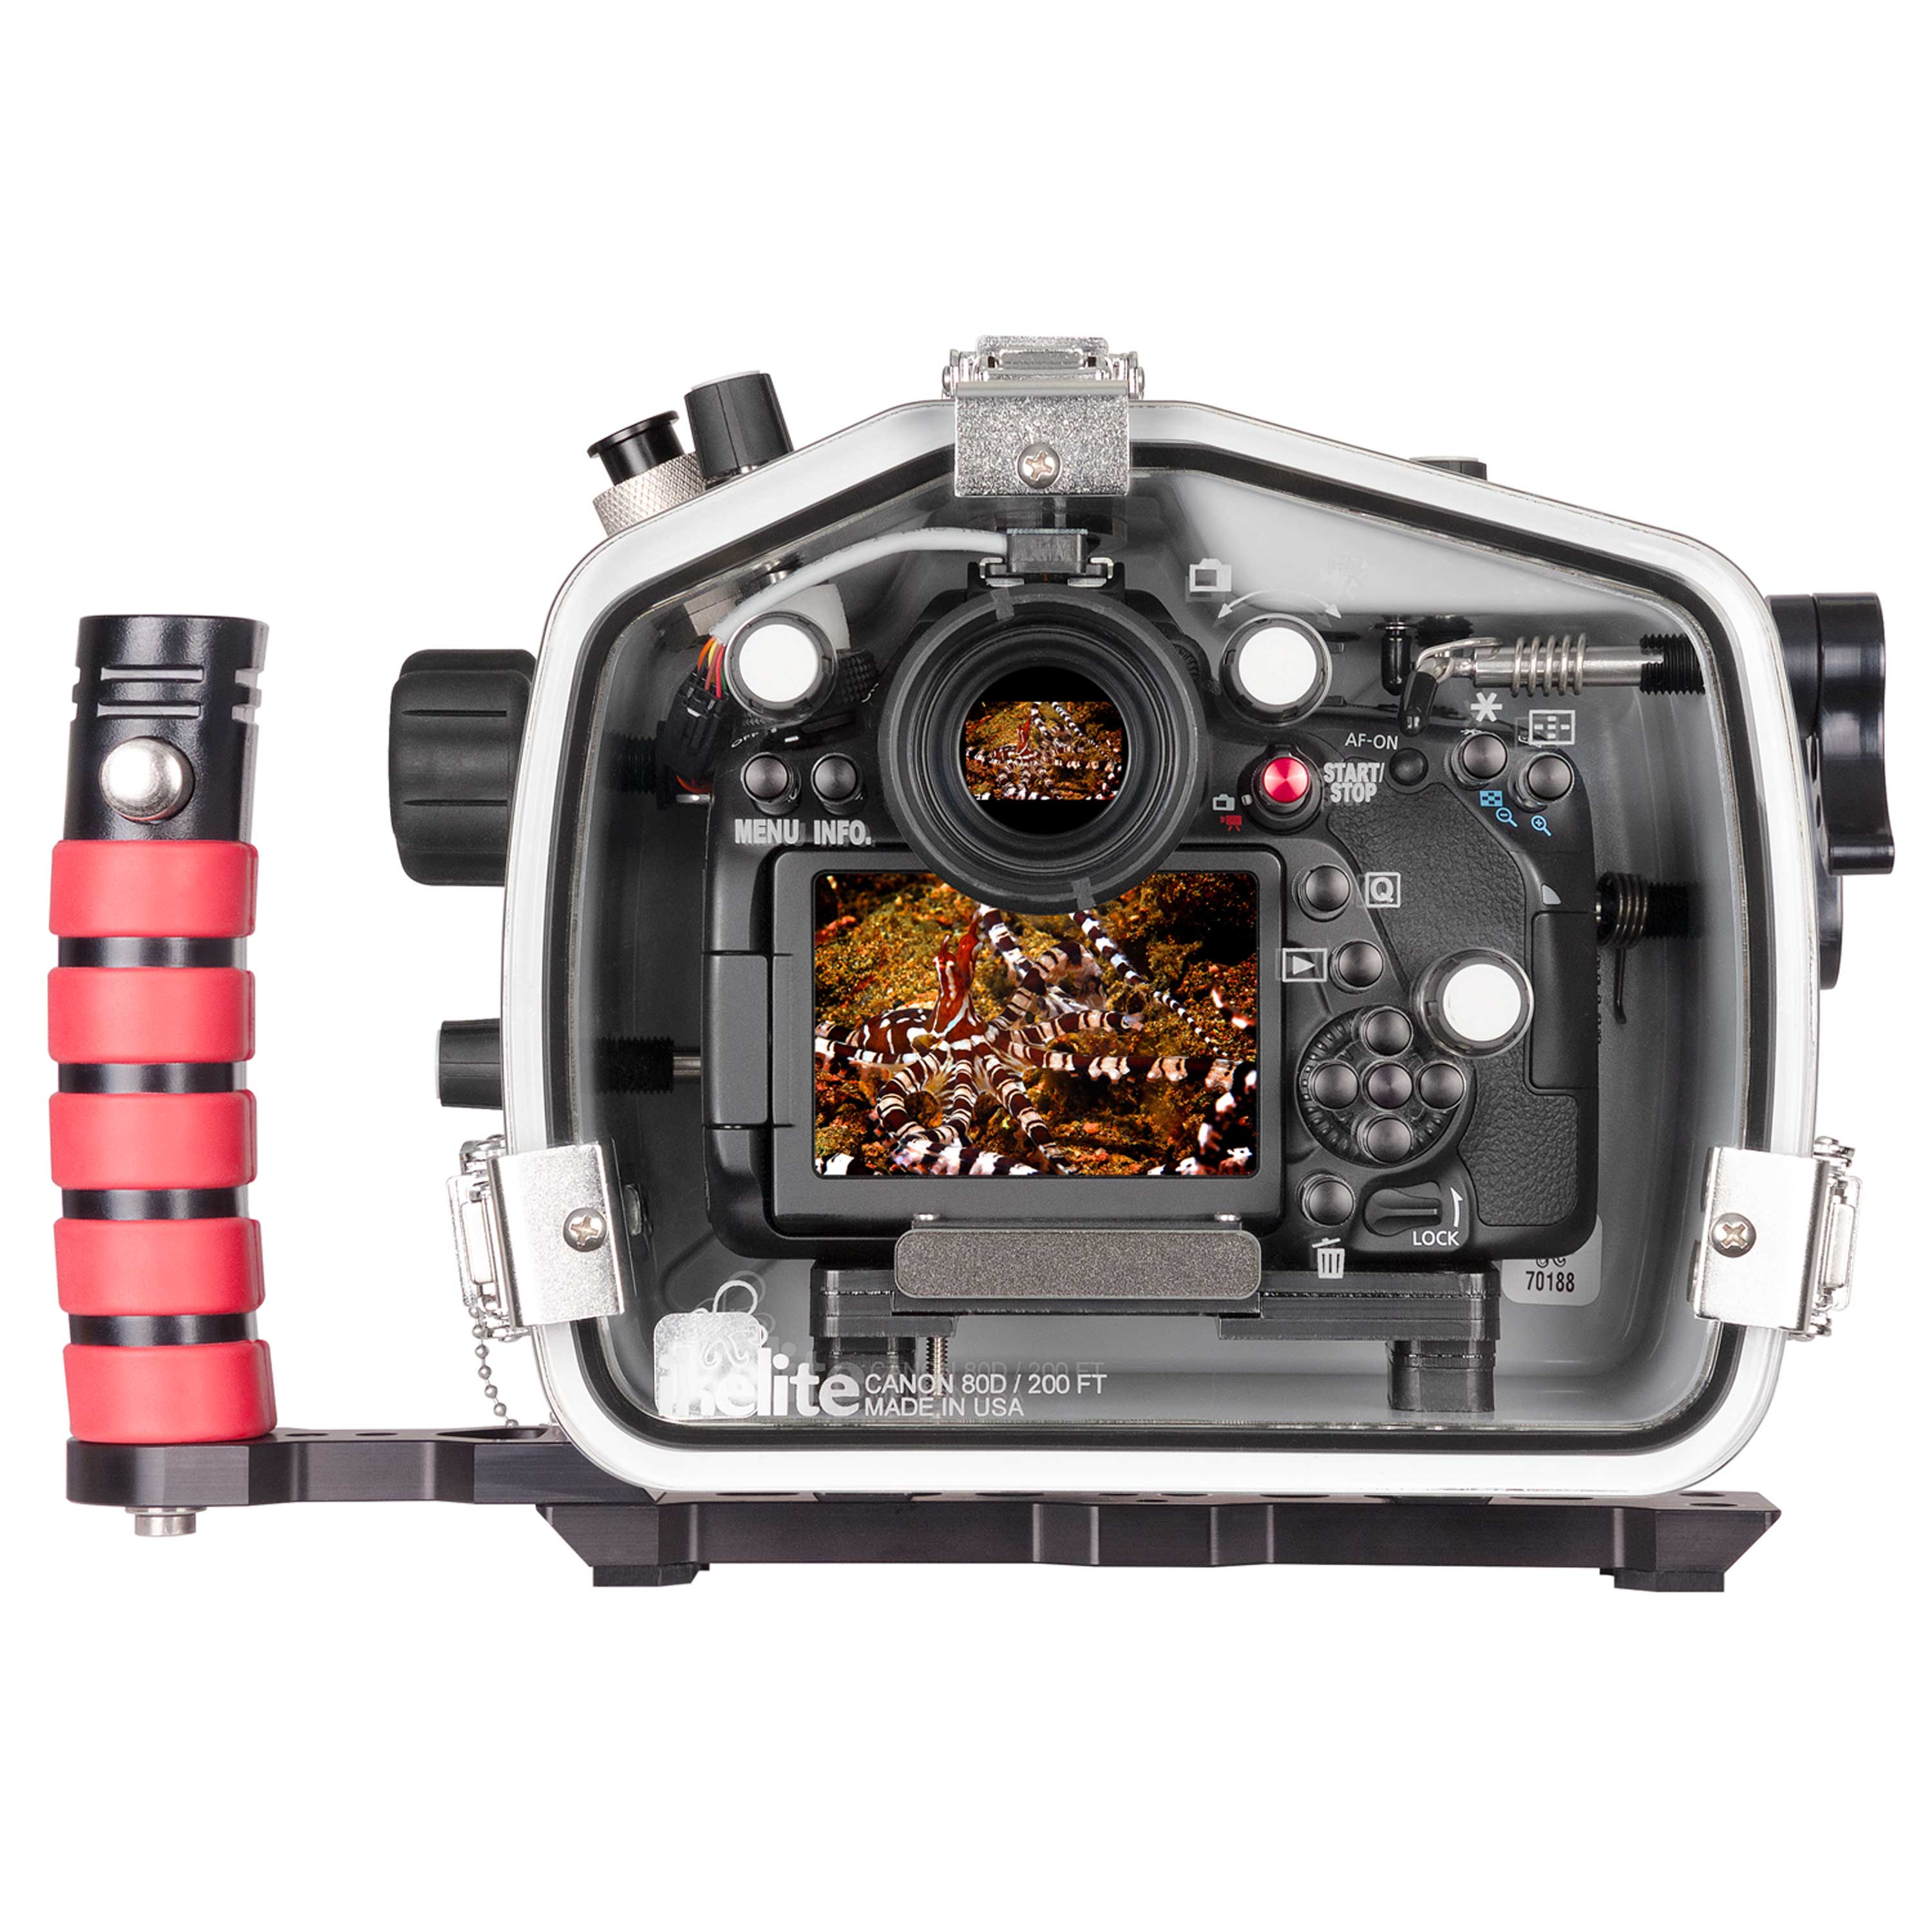 dwaas Nietje debat 200DL Underwater Housing for Canon EOS 80D DSLR Cameras